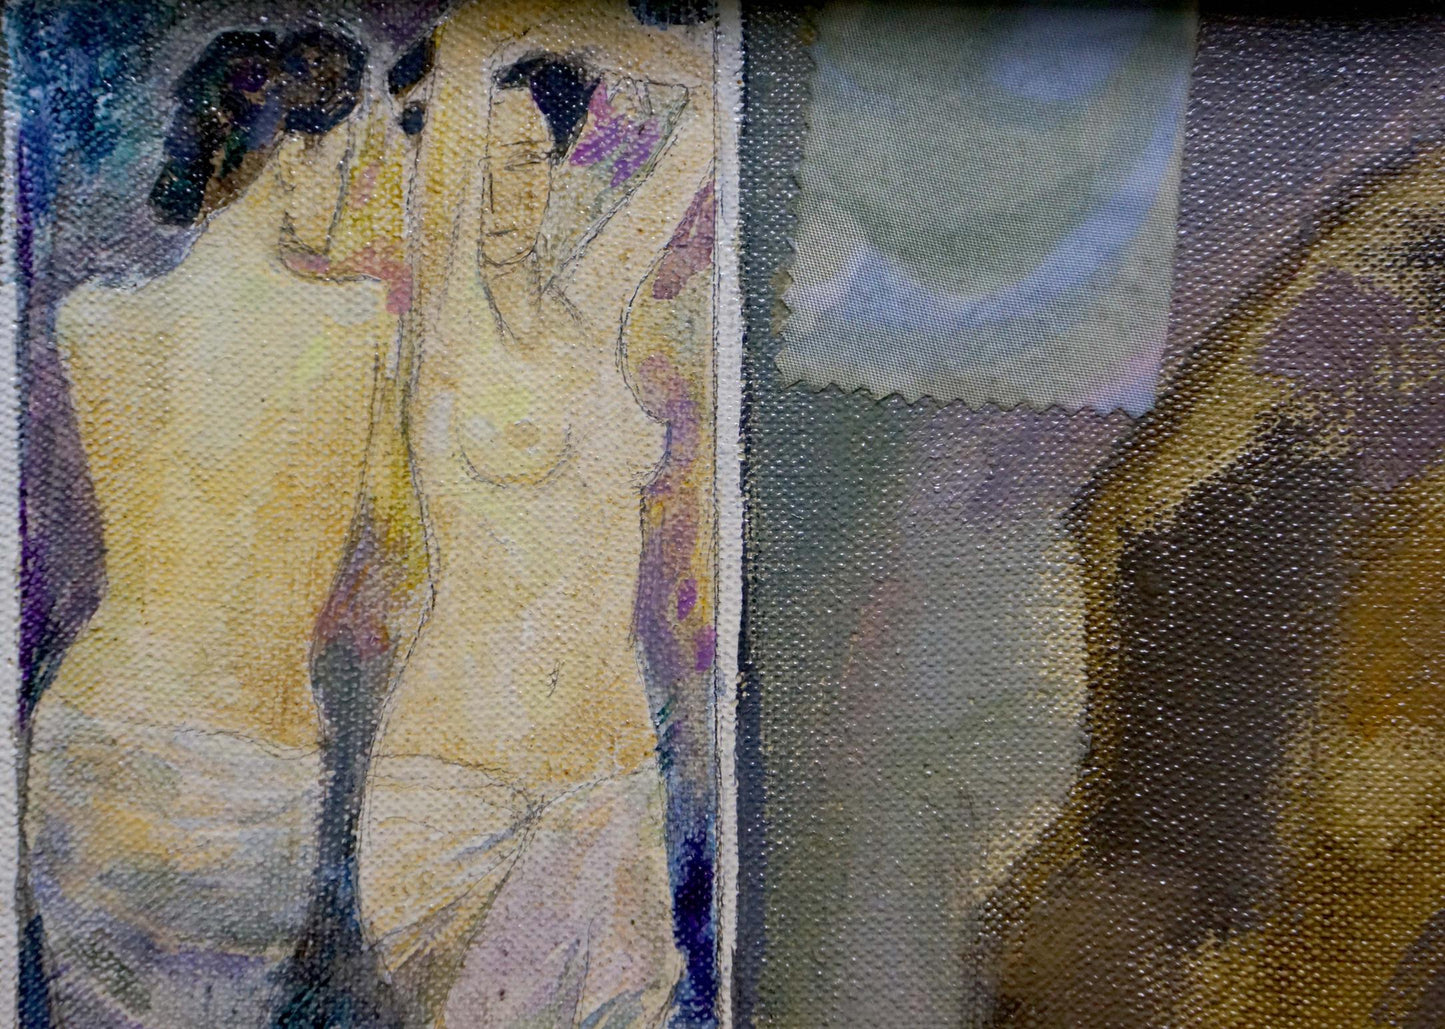 Painting Portrait of naked girls Belyak P. V.